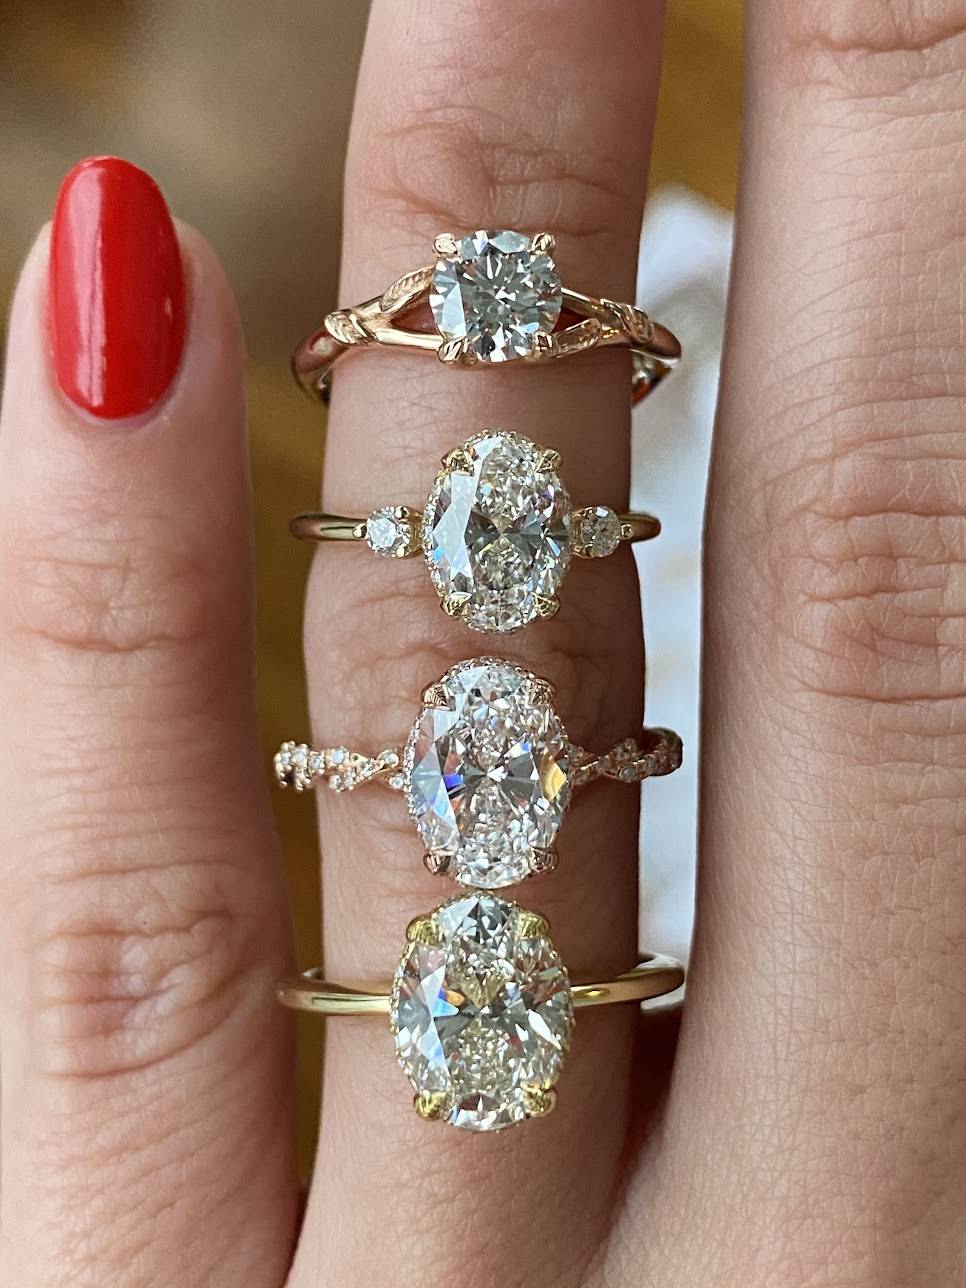 4 different diamond rings